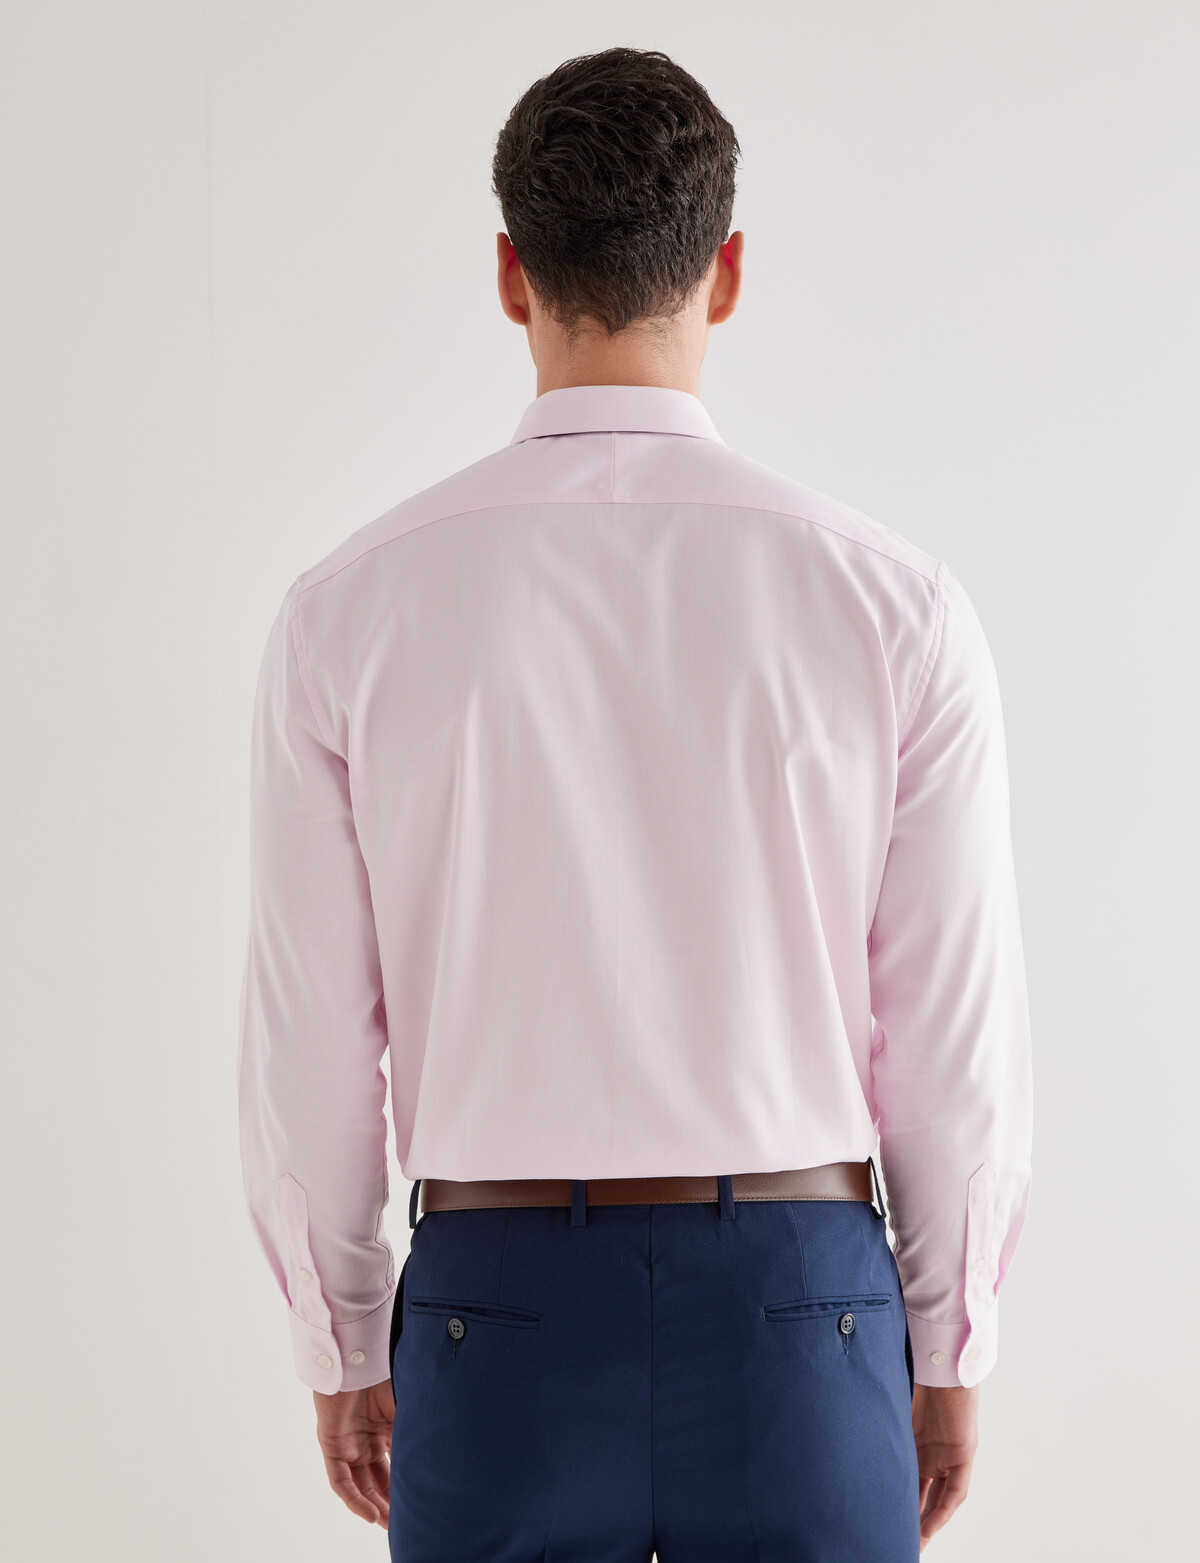 Laidlaw + Leeds Textured Long-Sleeve Shirt, Pink - Formal Shirts